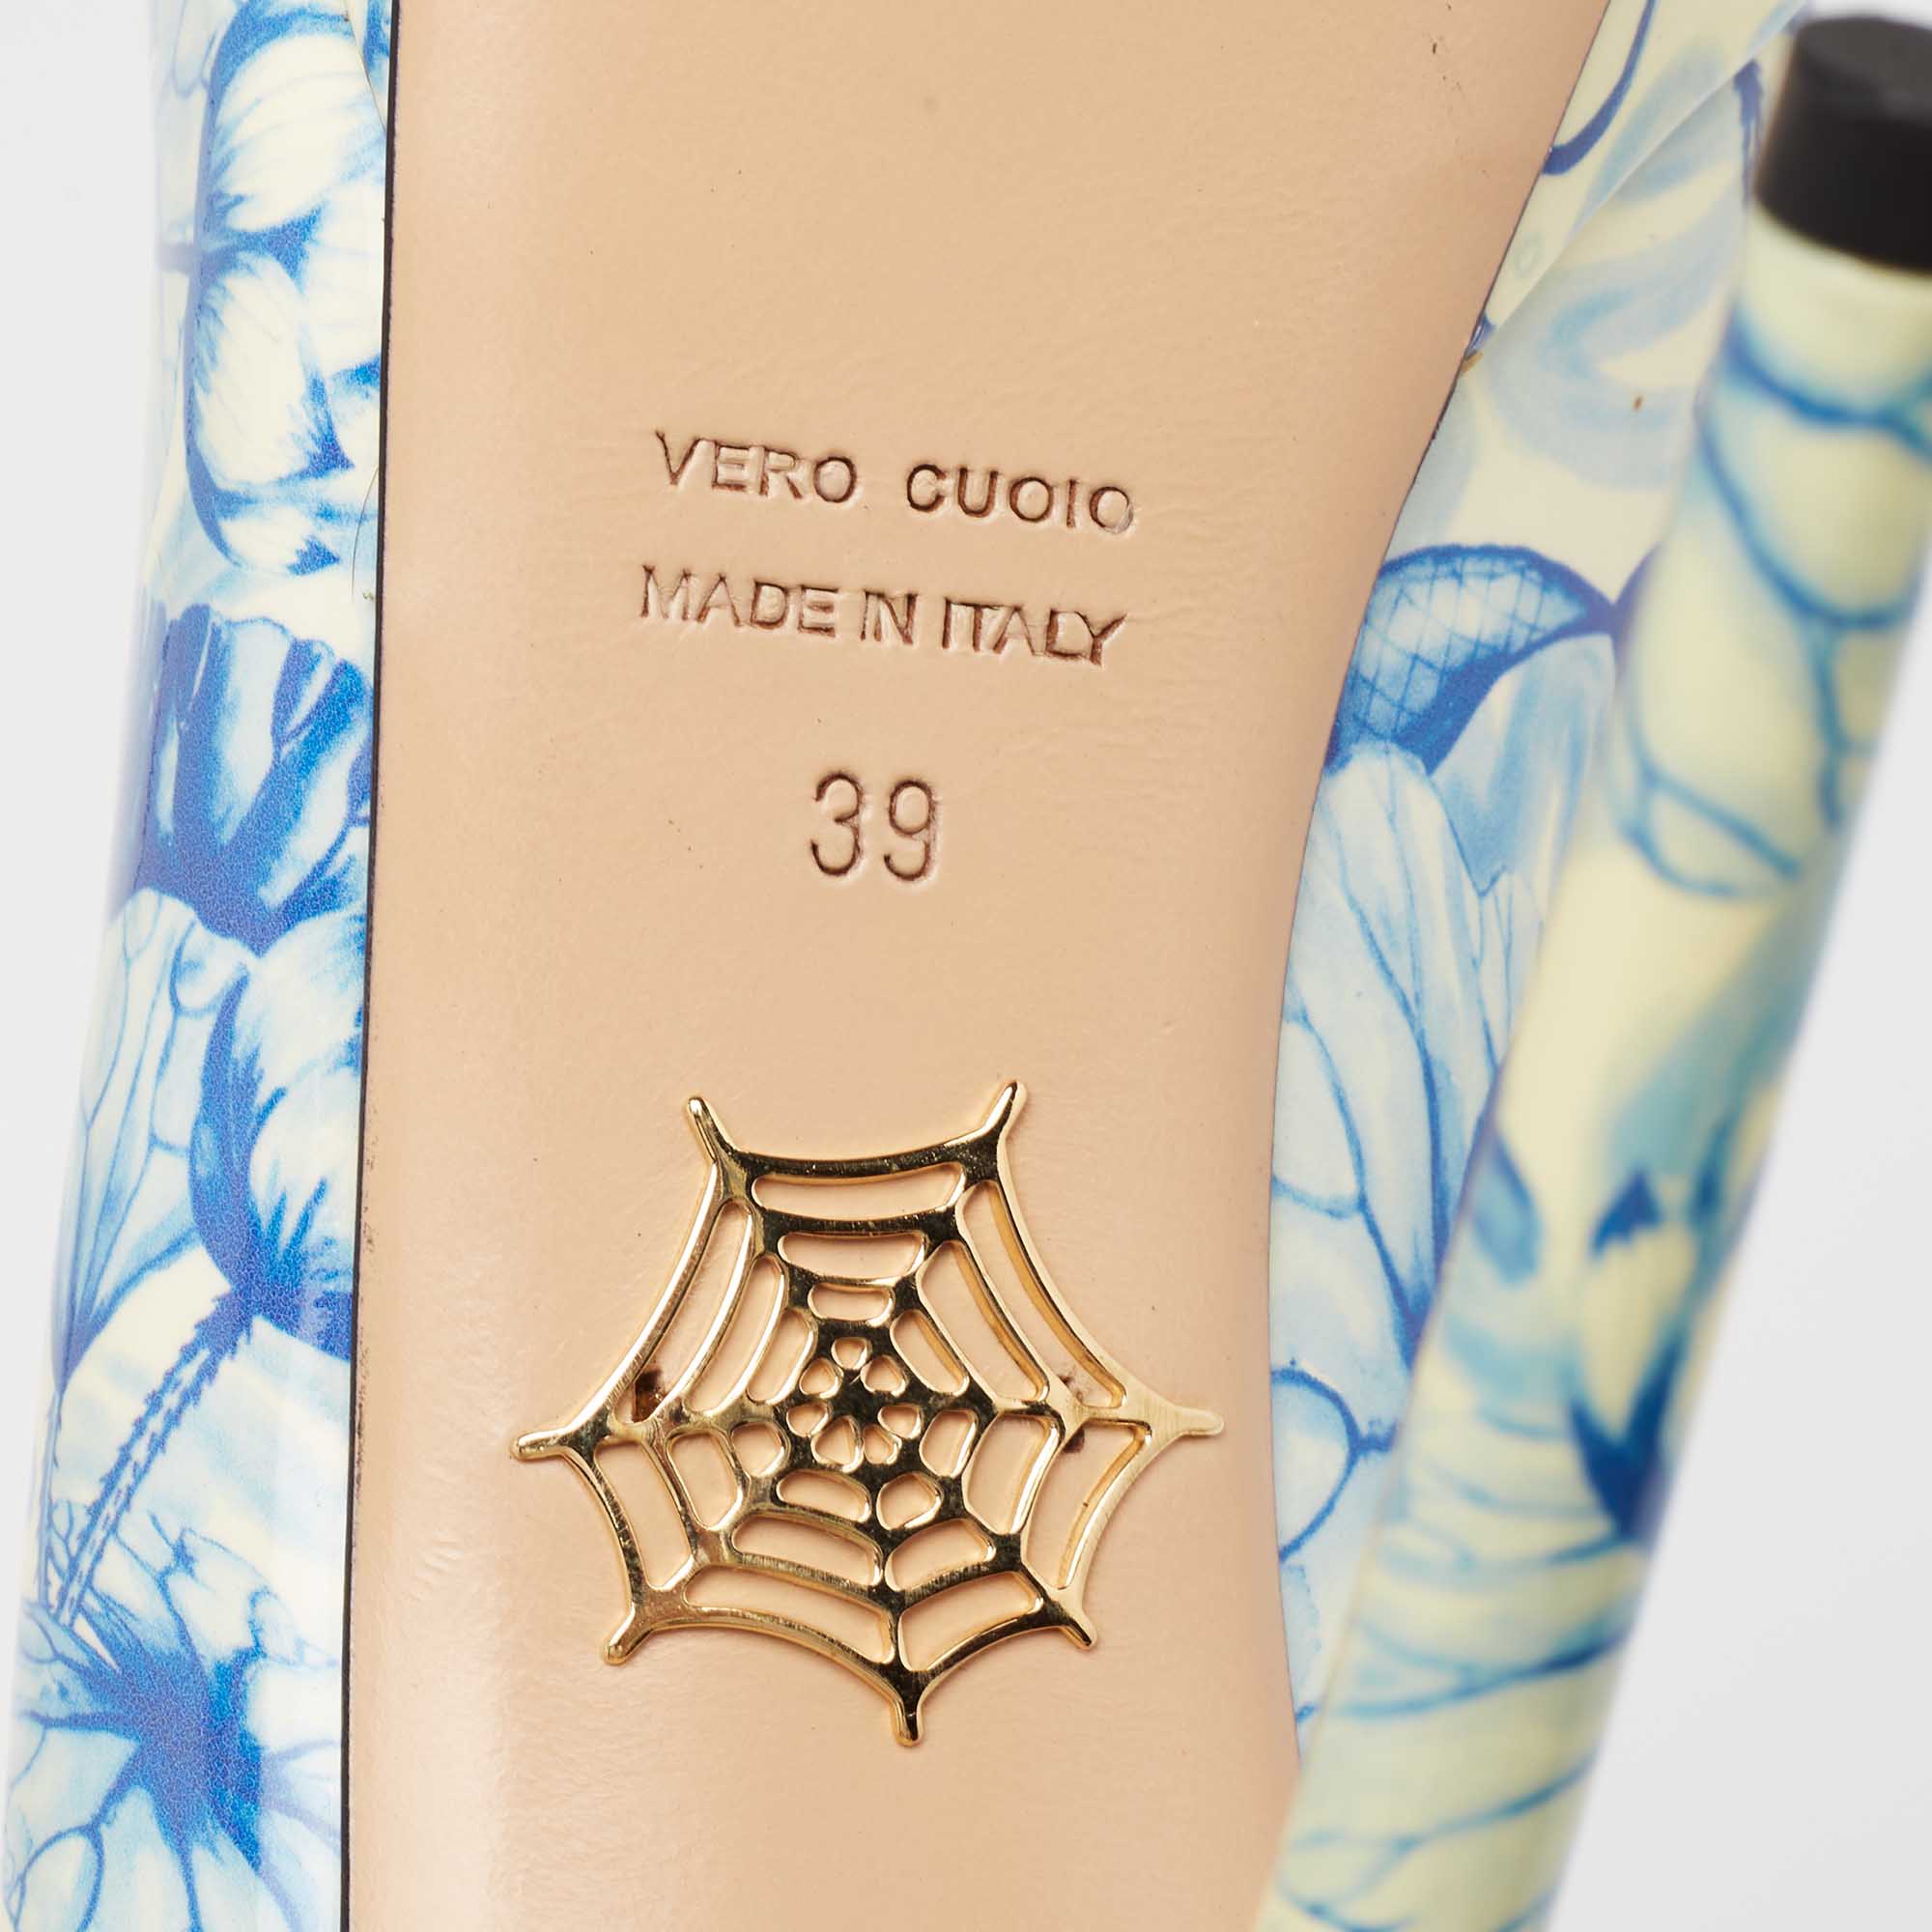 Charlotte Olympia Blue/White Ming Koi Carp Print Patent Leather Ankle Strap Pumps 39